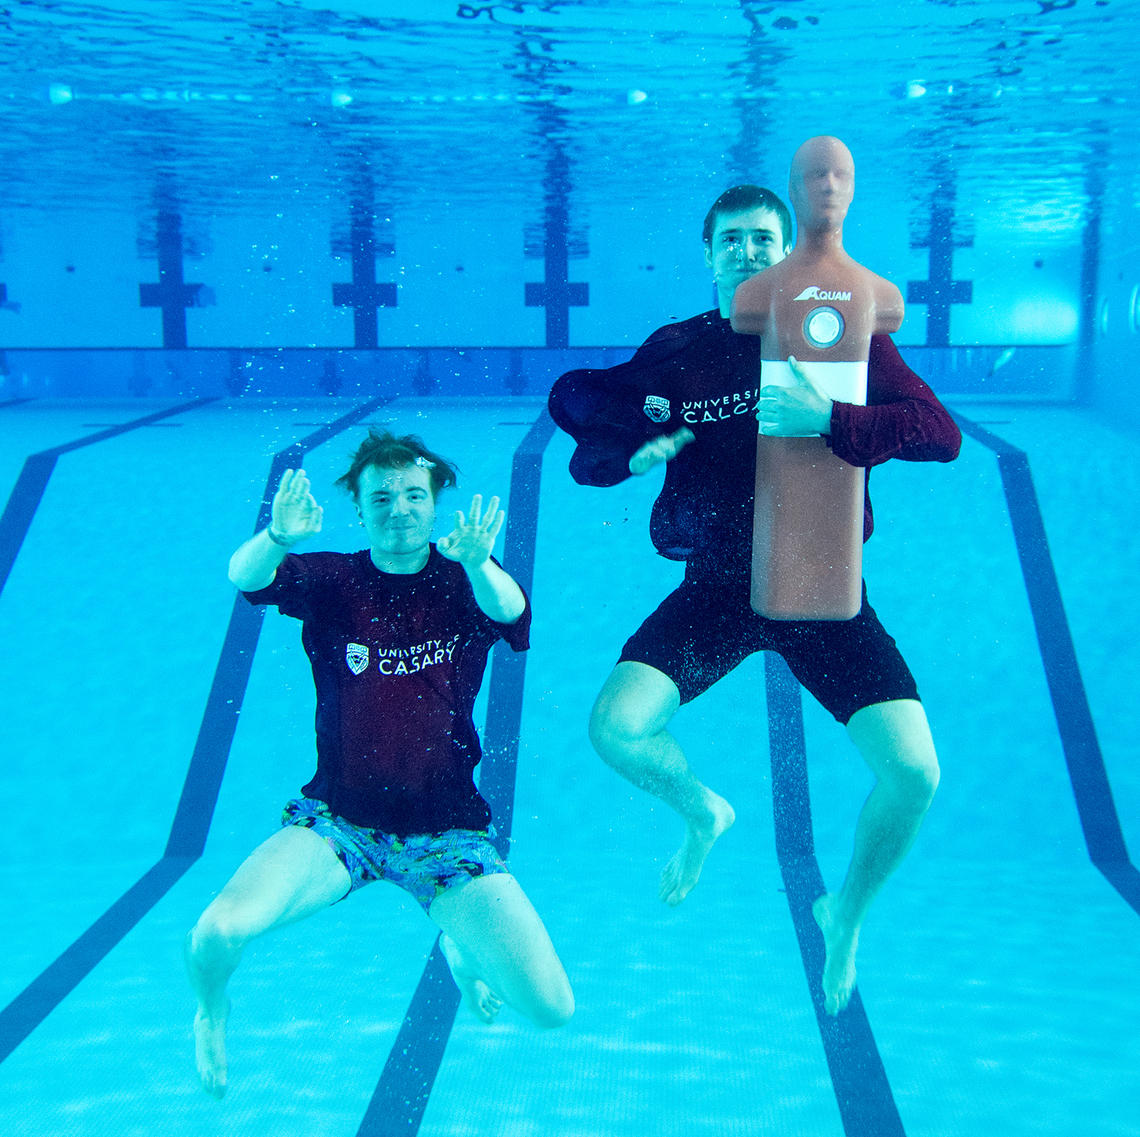 Lifeguards in the UCalgary pool